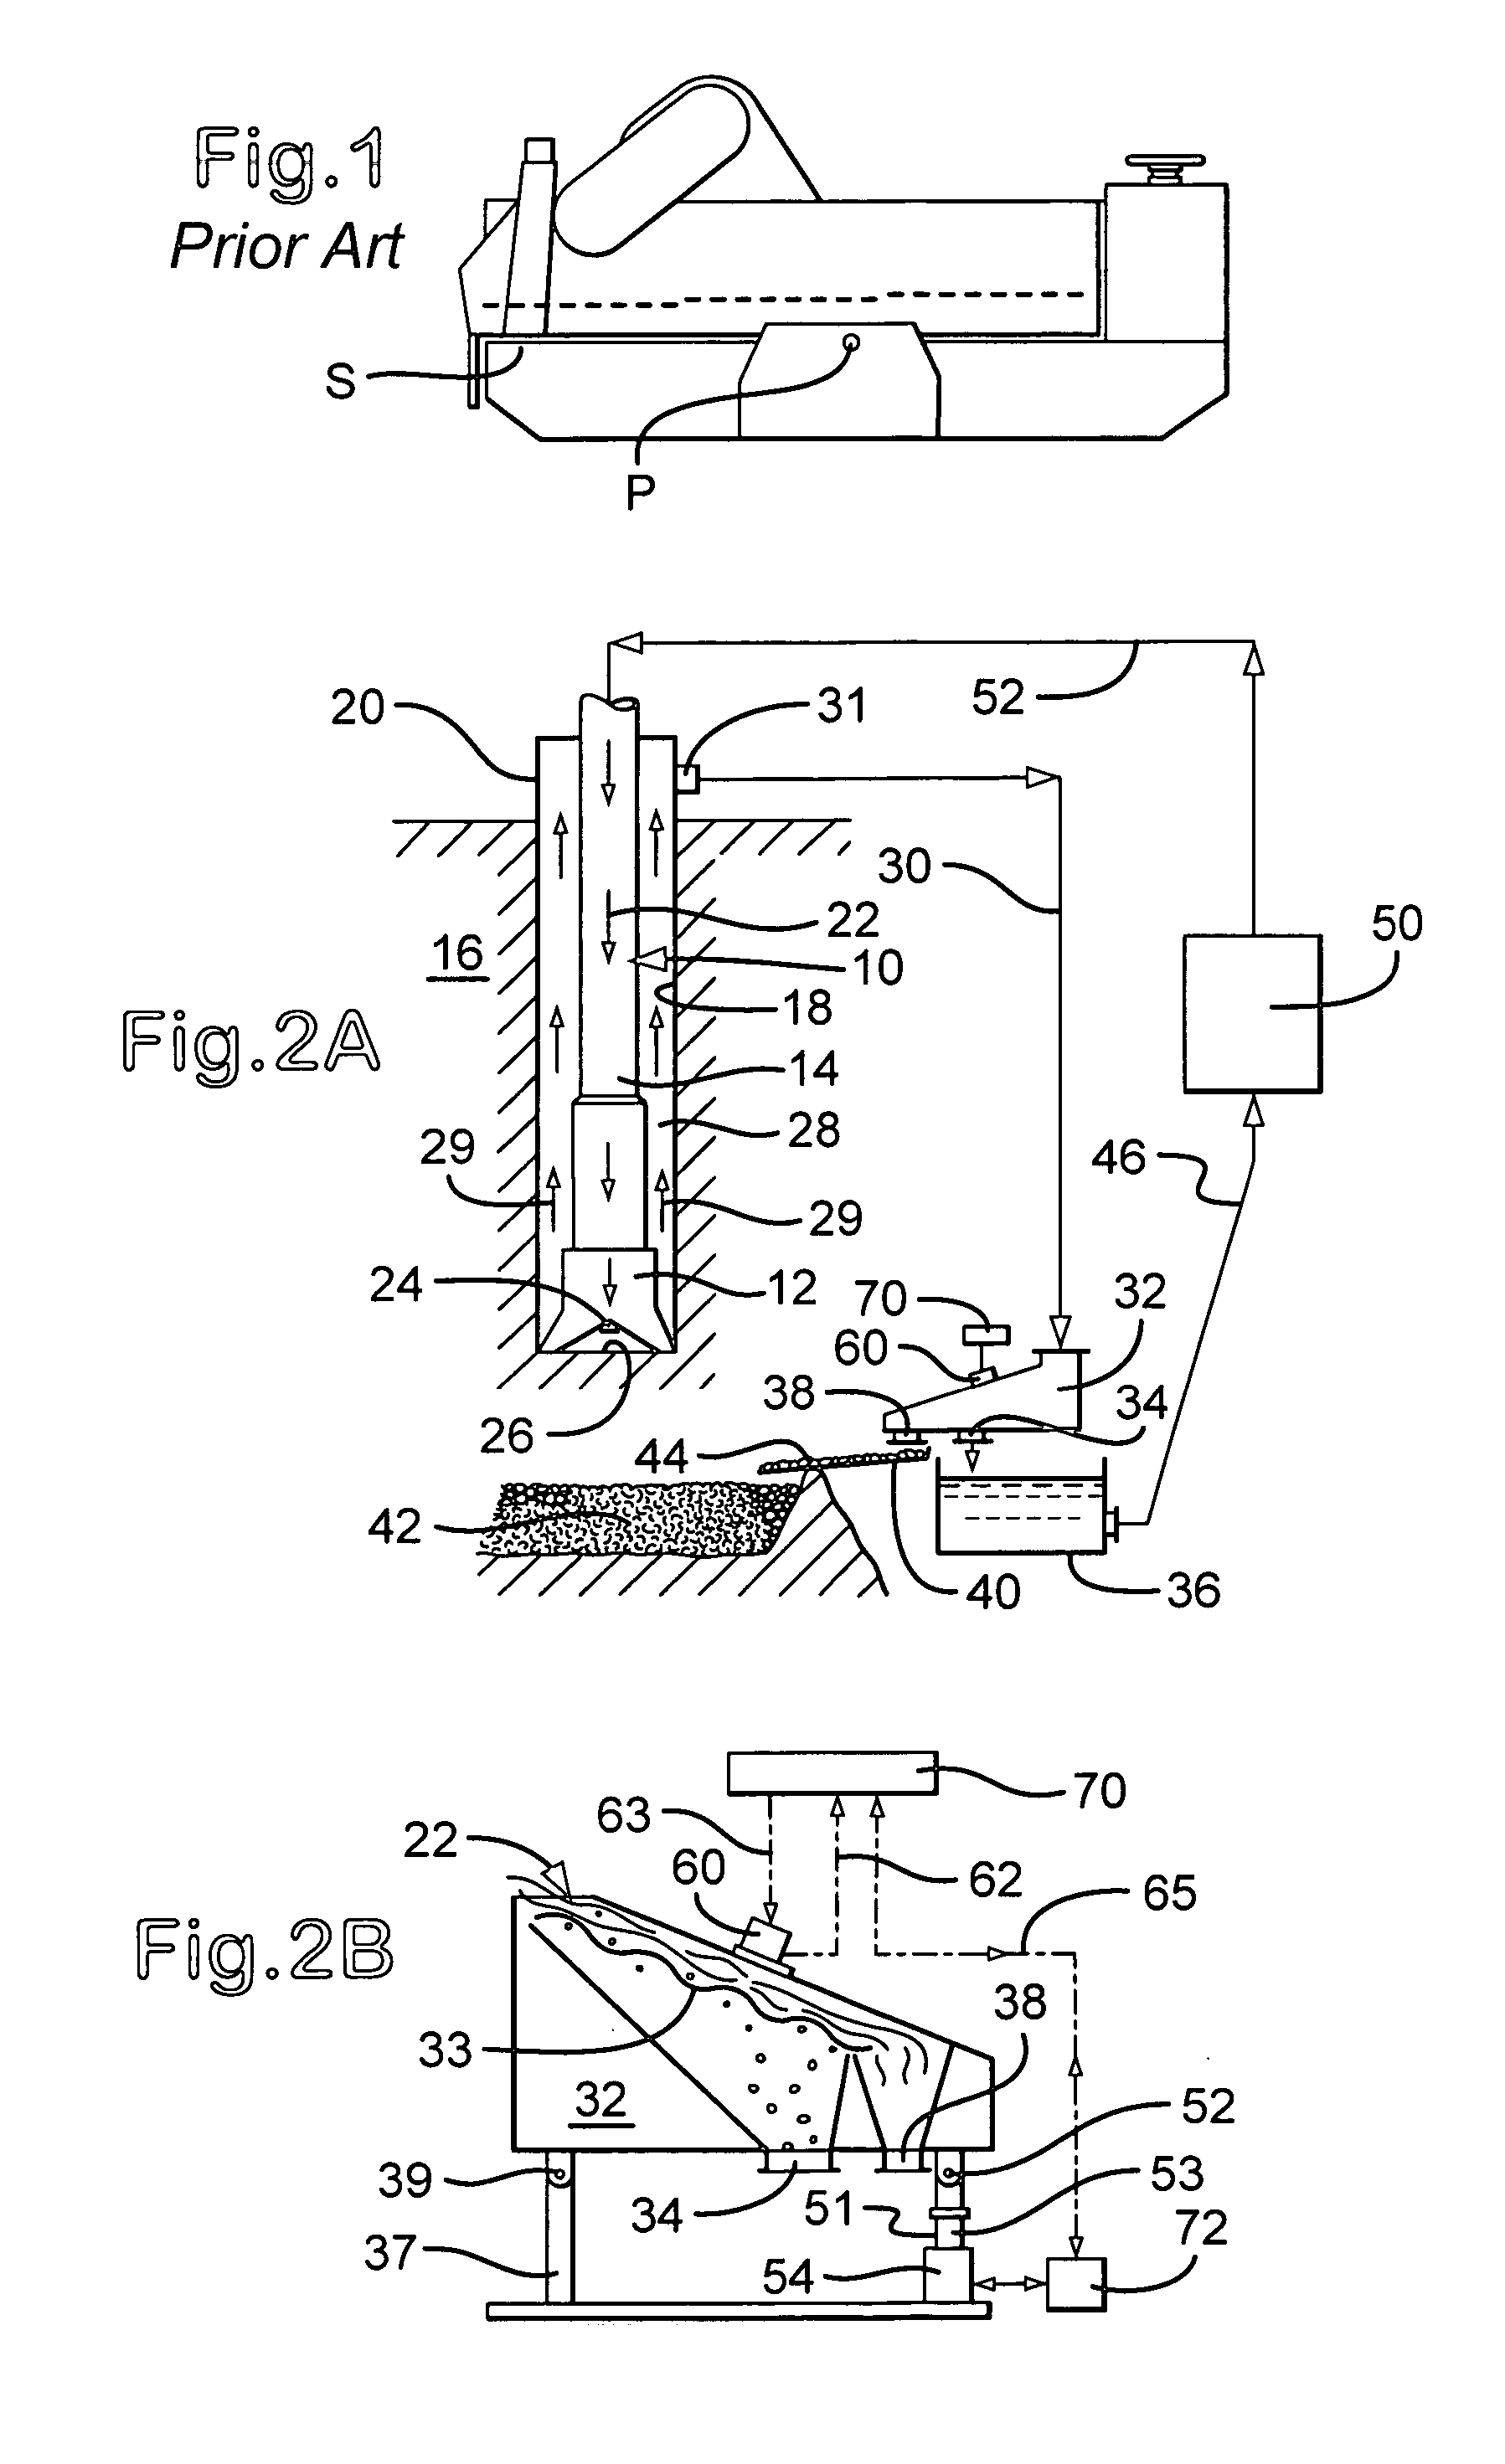 Adjustable basket vibratory separator